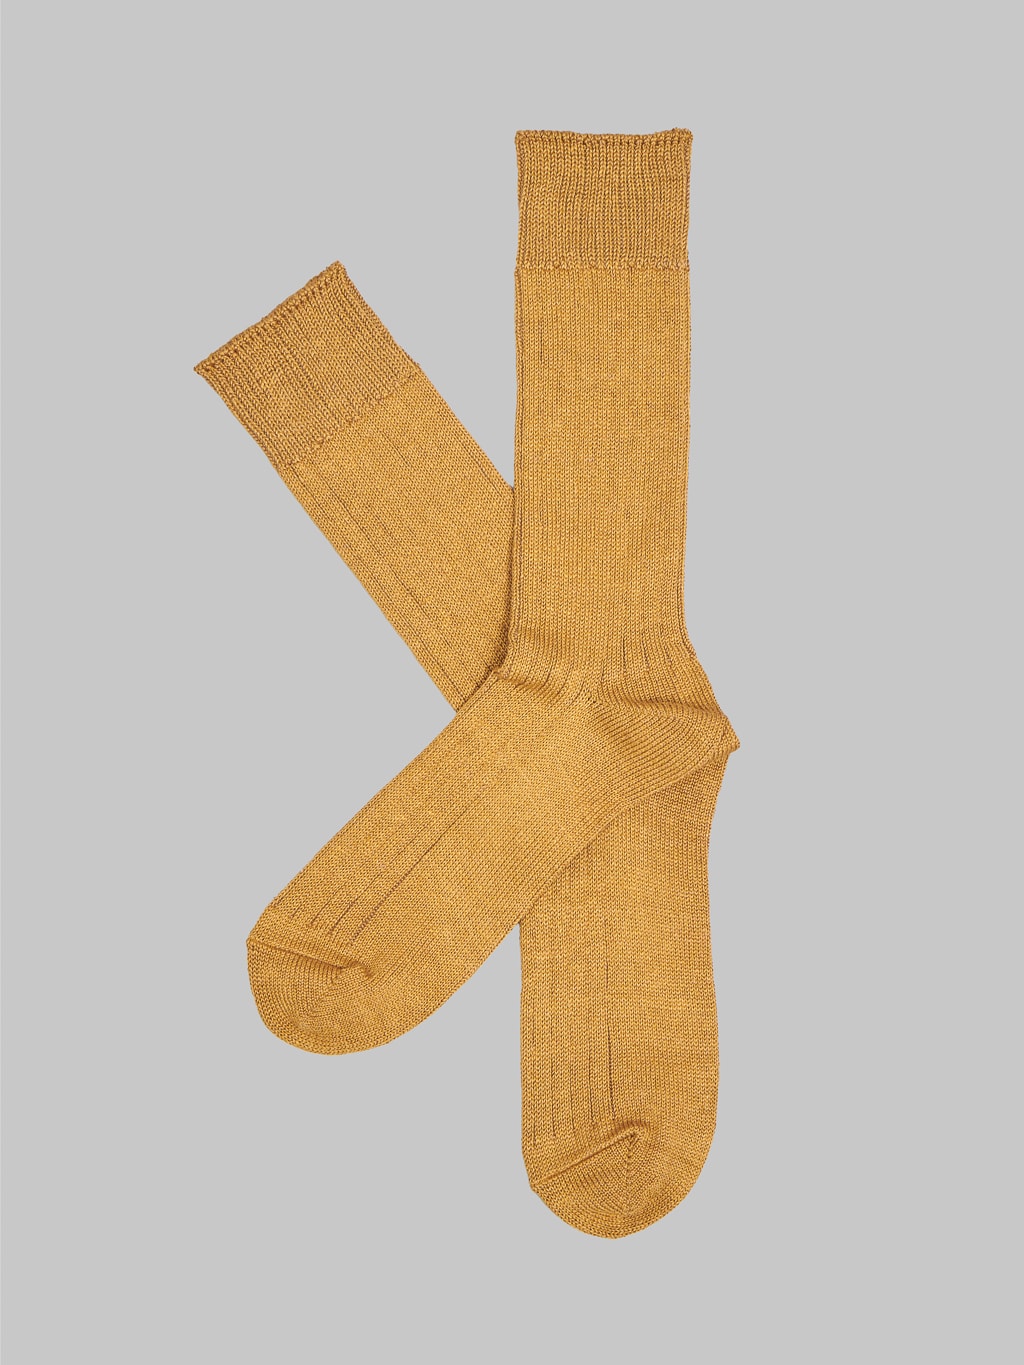 ROTOTO Linen Cotton Ribbed Crew Socks Dark Gold